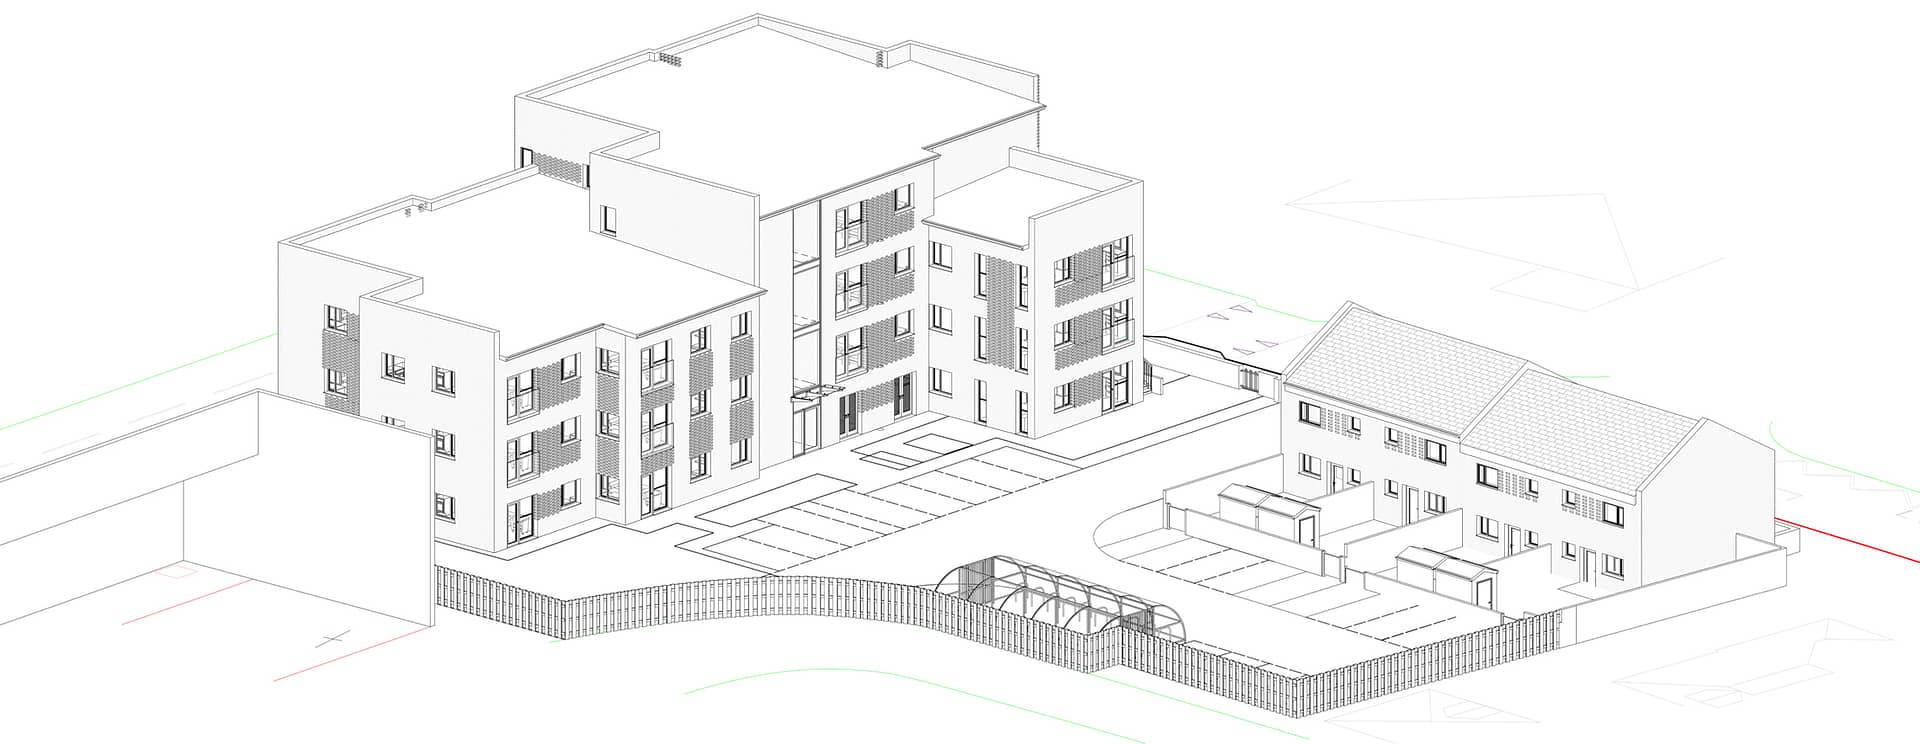 Michaelstone Road Housing, Cardiff - Apartments and Houses Isometrics